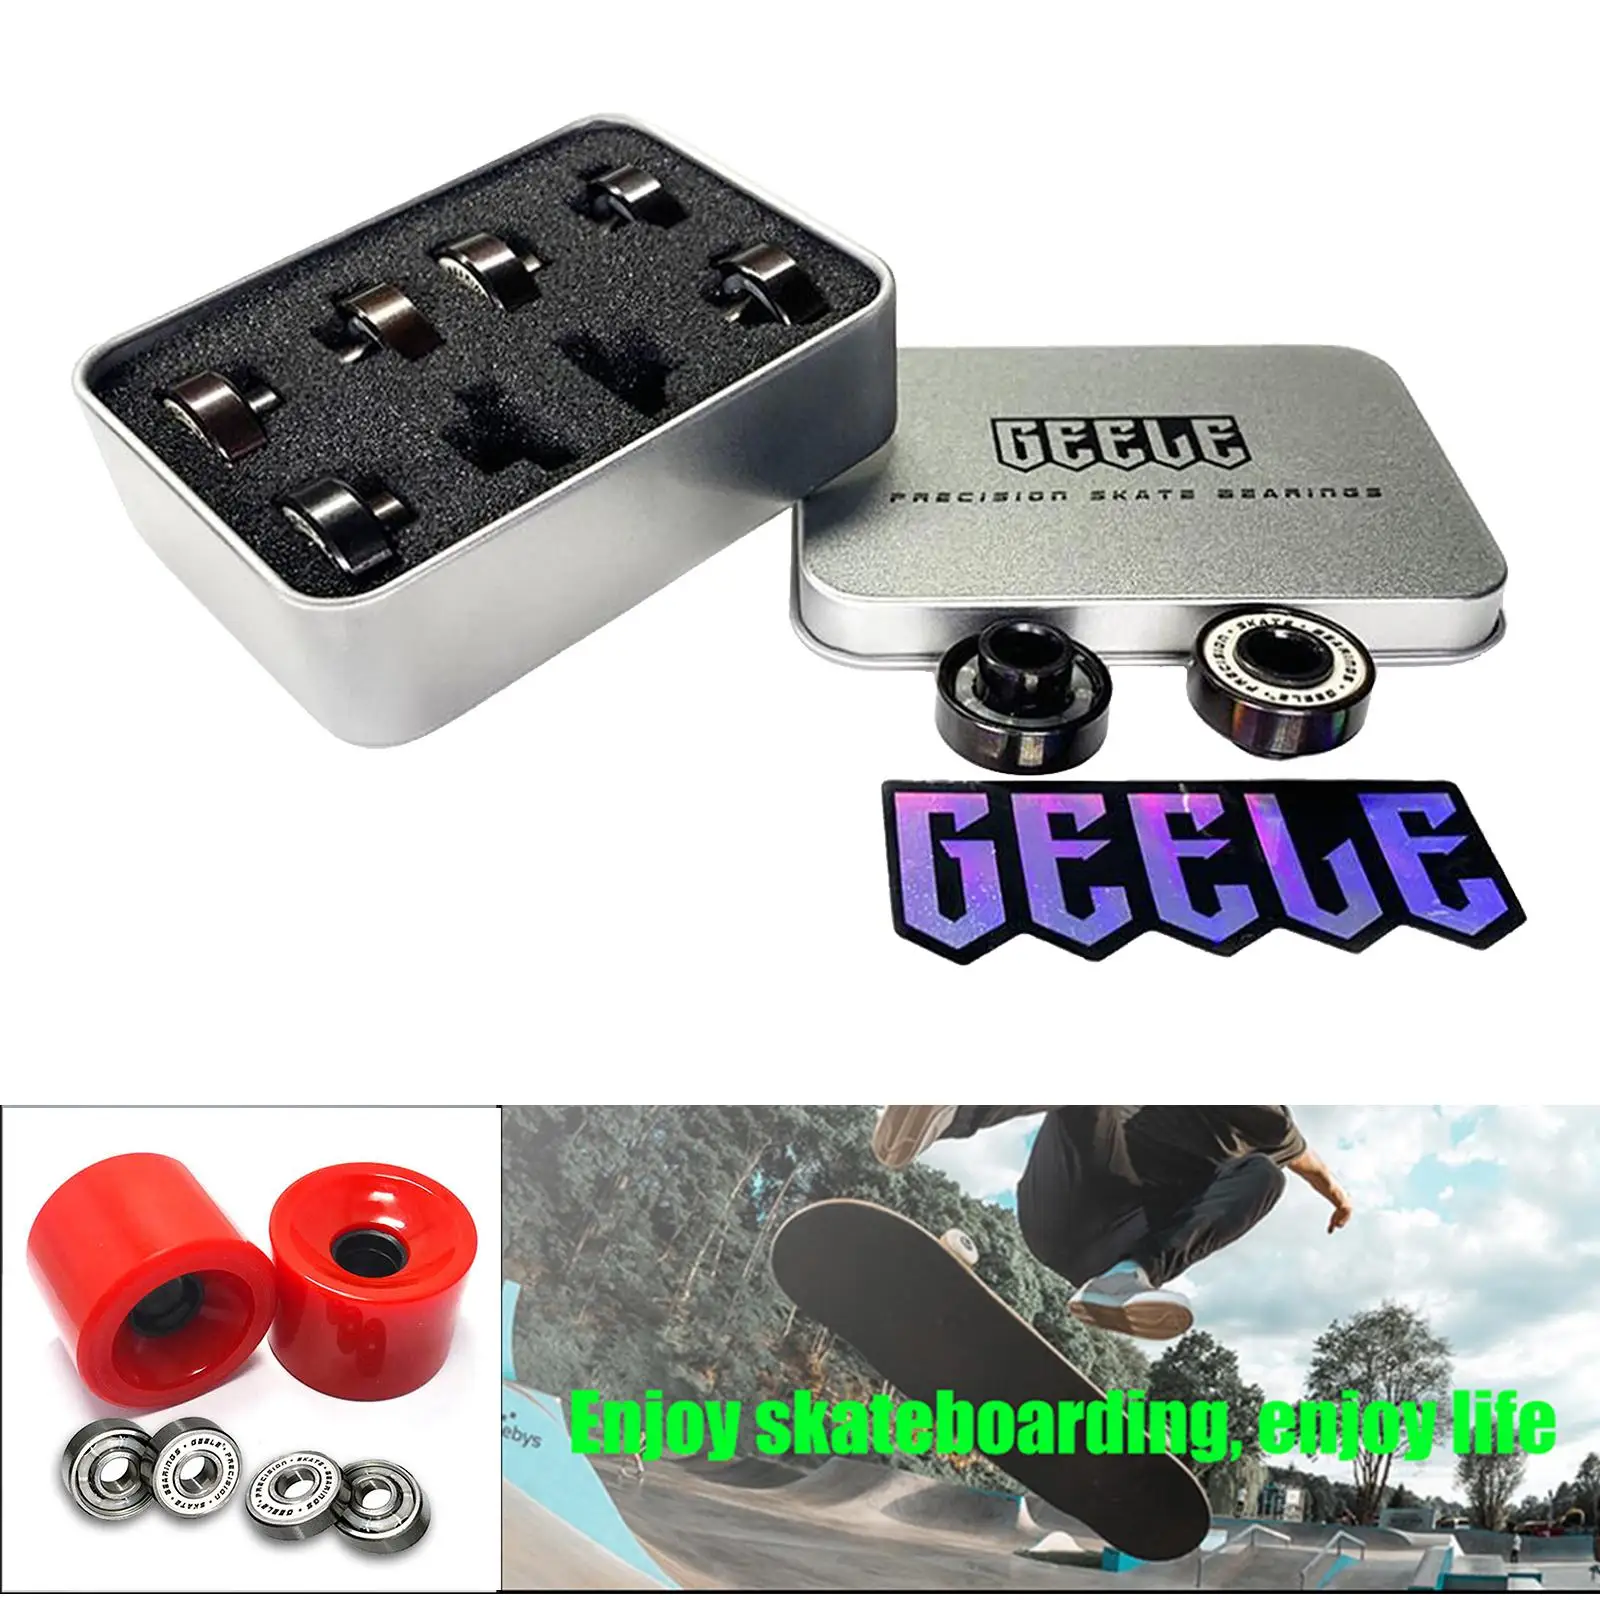 

8pcs Premium Skateboard Bearings, Pro Longboard Bearings, 608, ABEC-11 Double Shields Wheel Bearing Replacement Spinners